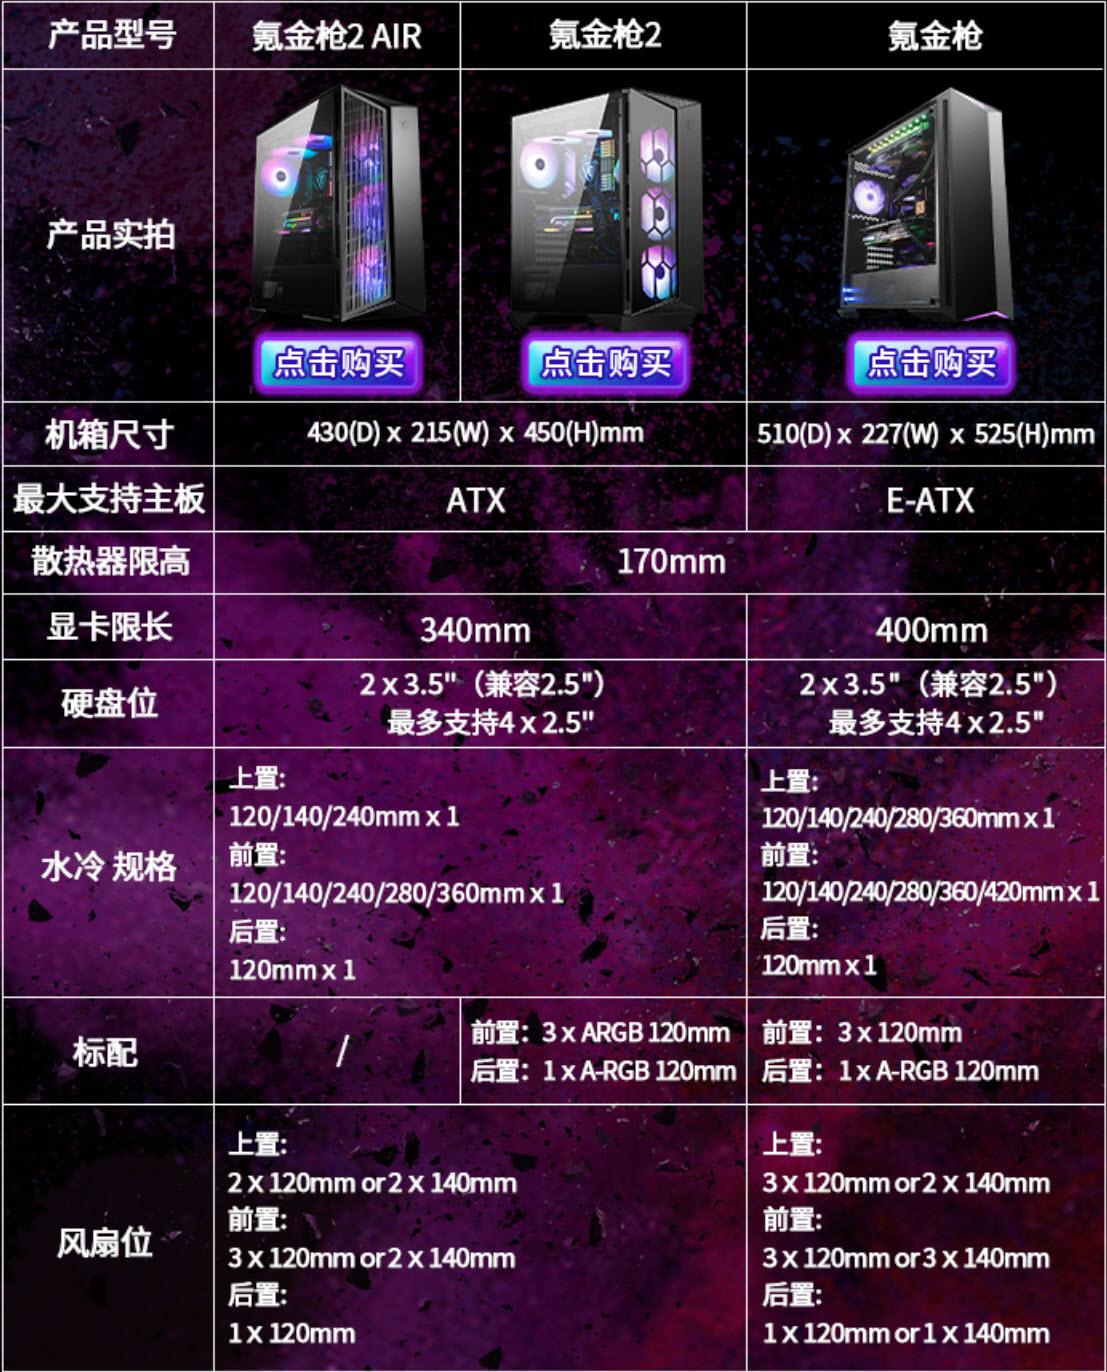 NVIDIA GTX 760 vs AMD显卡：性能、价格、功耗、散热全方位对比  第3张